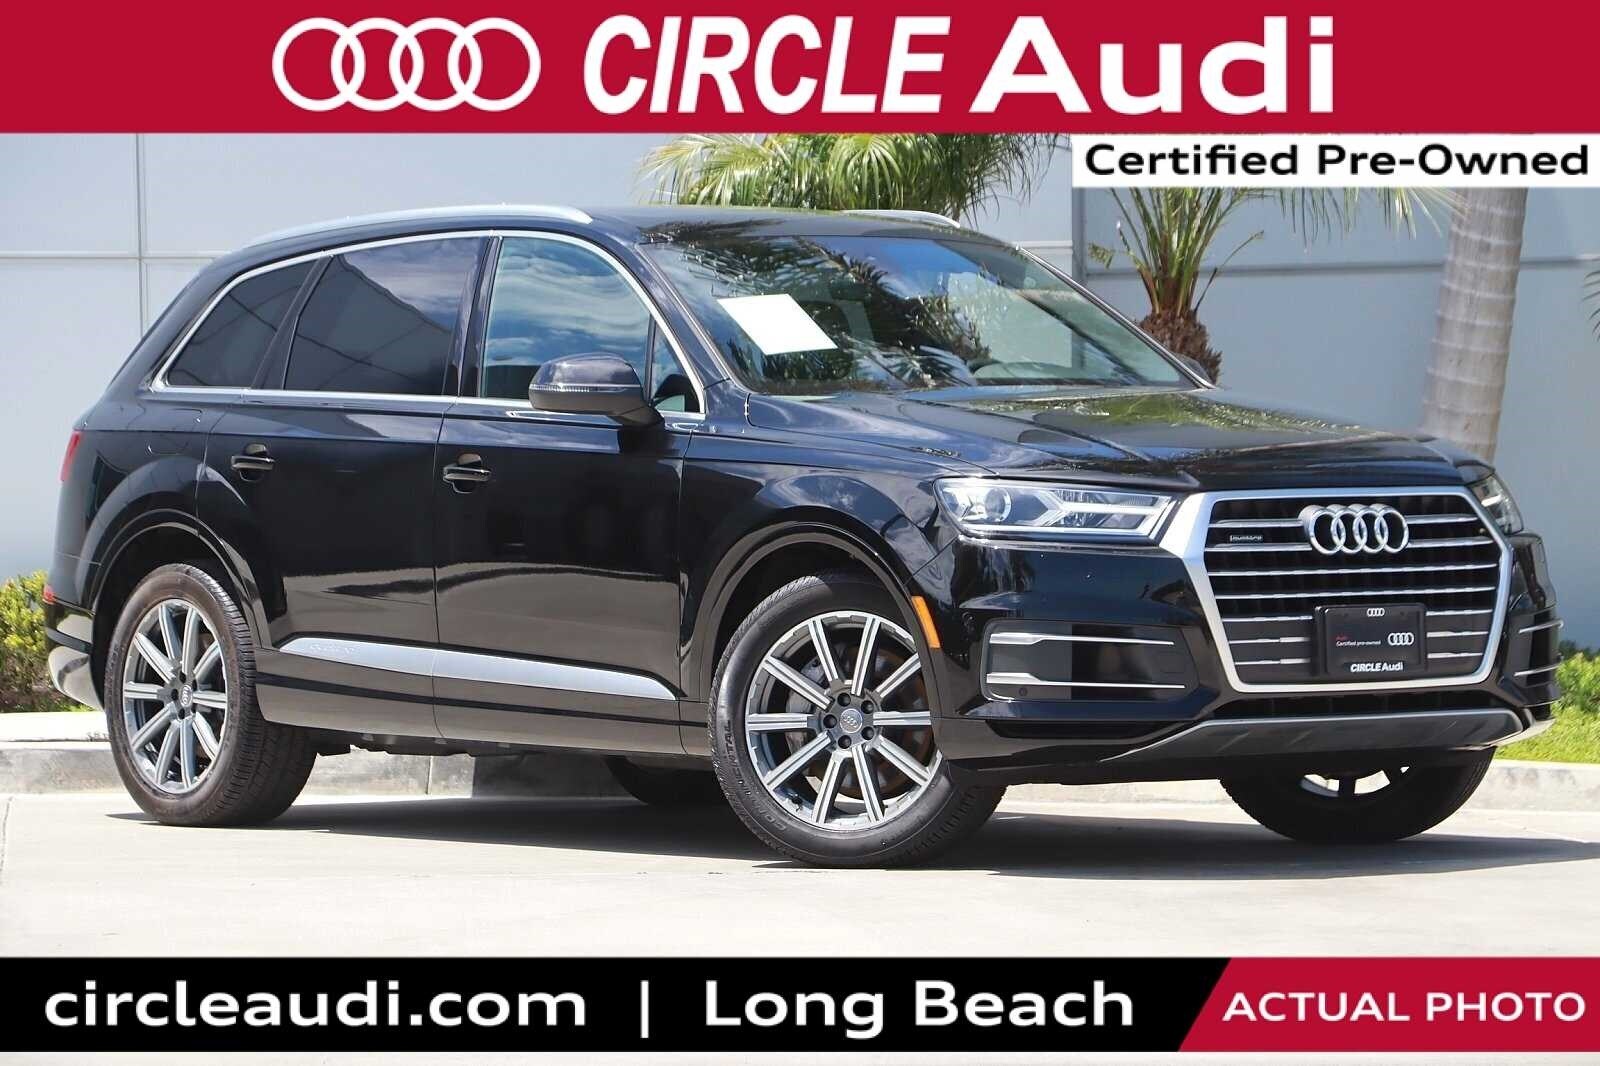 Used Audi Q7 Long Beach Ca